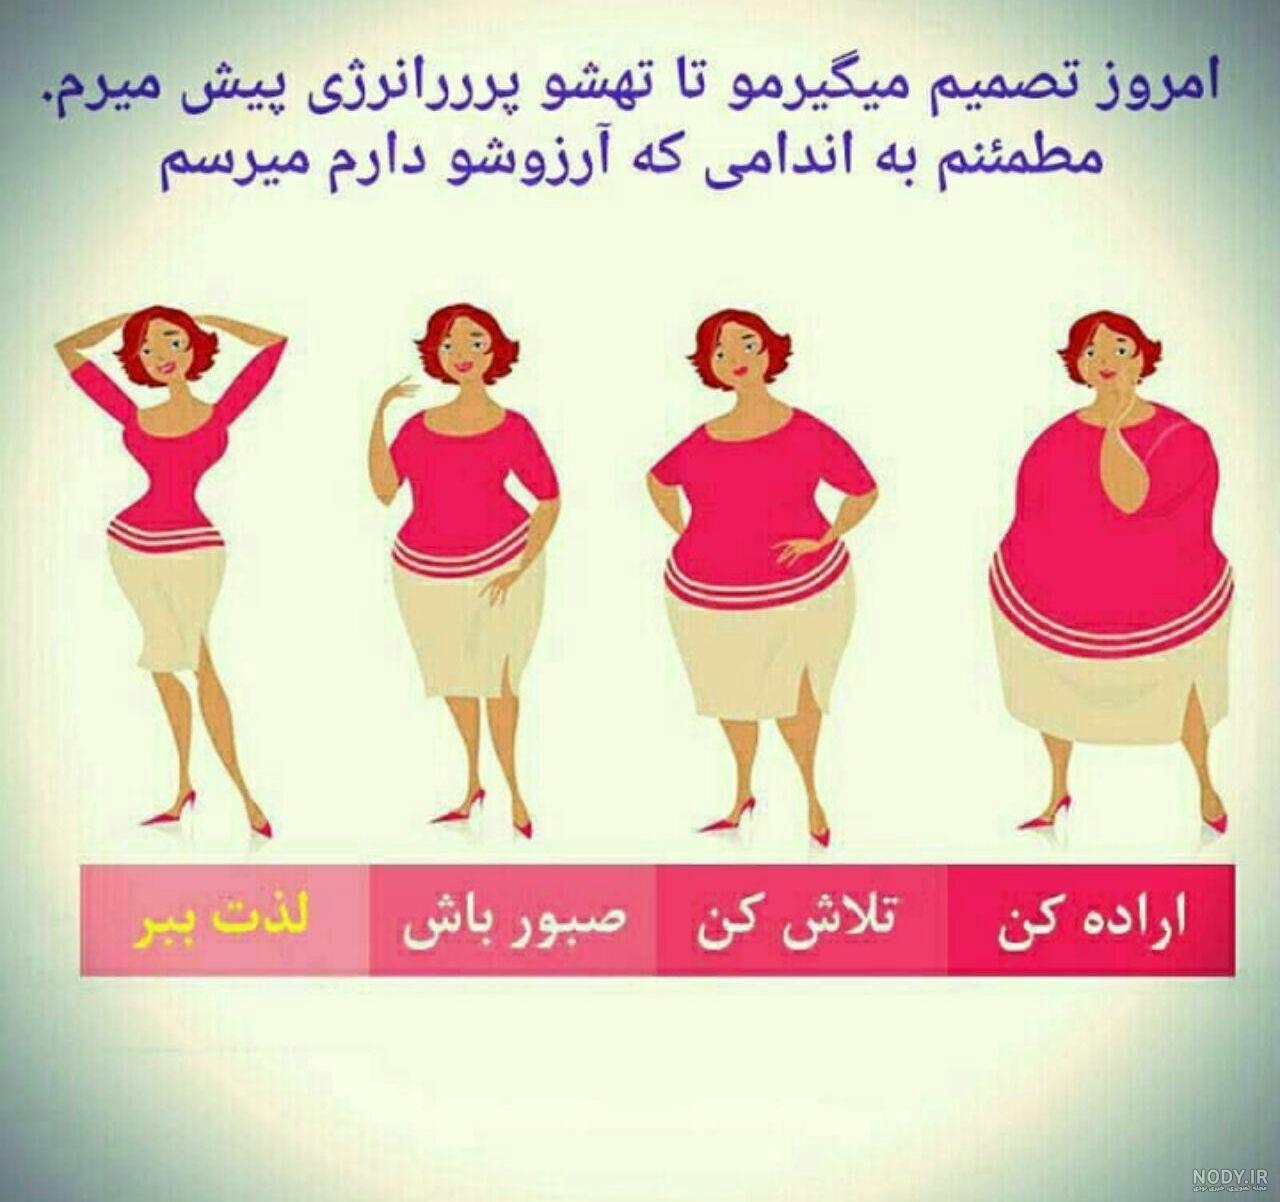 عکس در مورد چاقی و لاغری